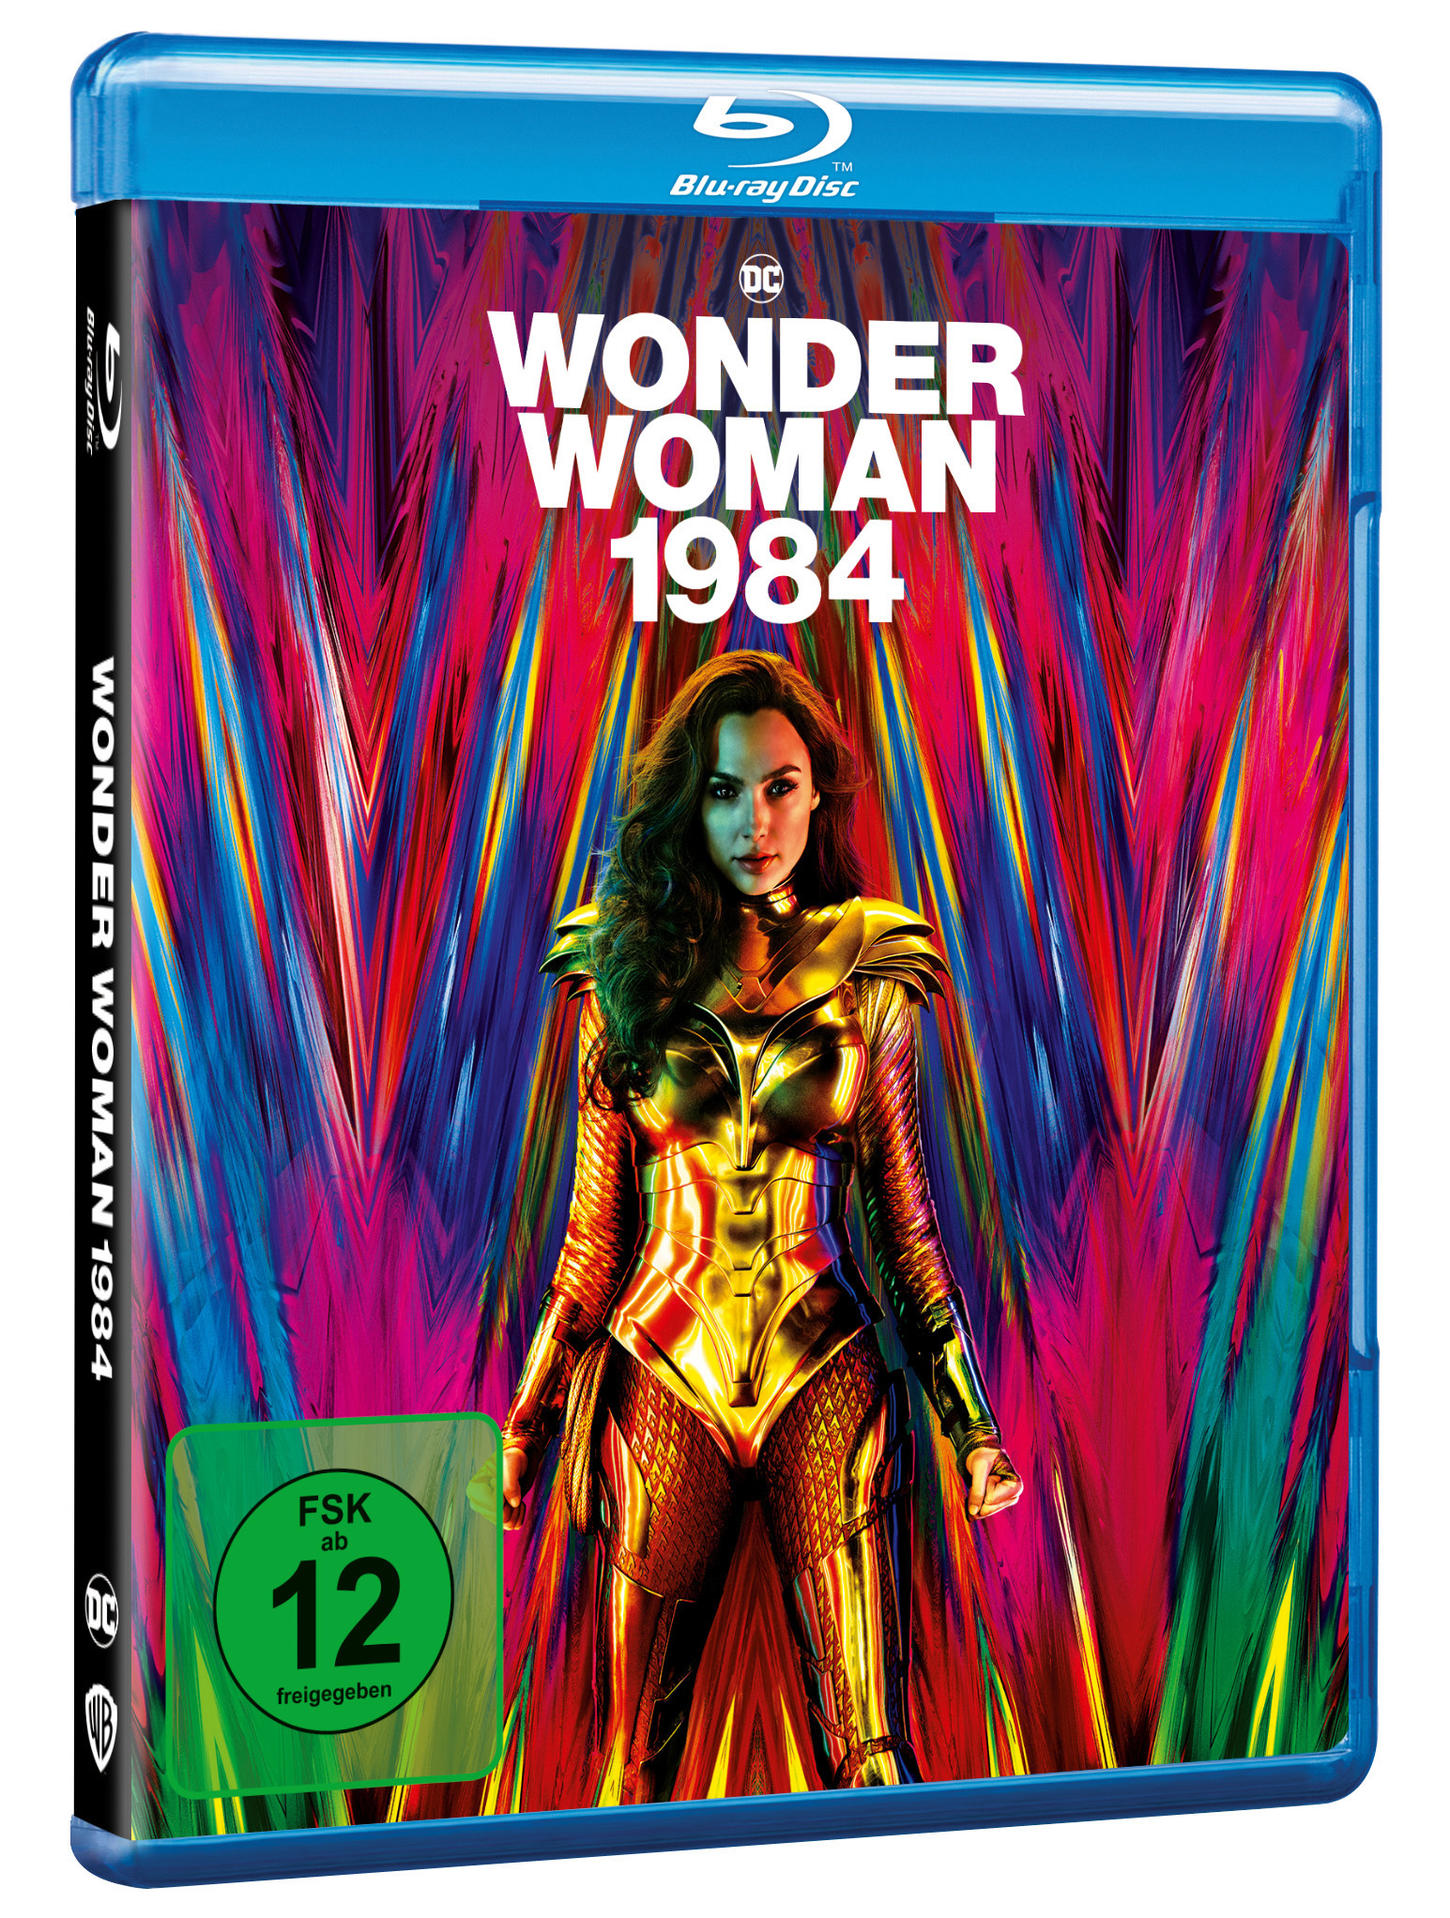 Woman 1984 Wonder Blu-ray